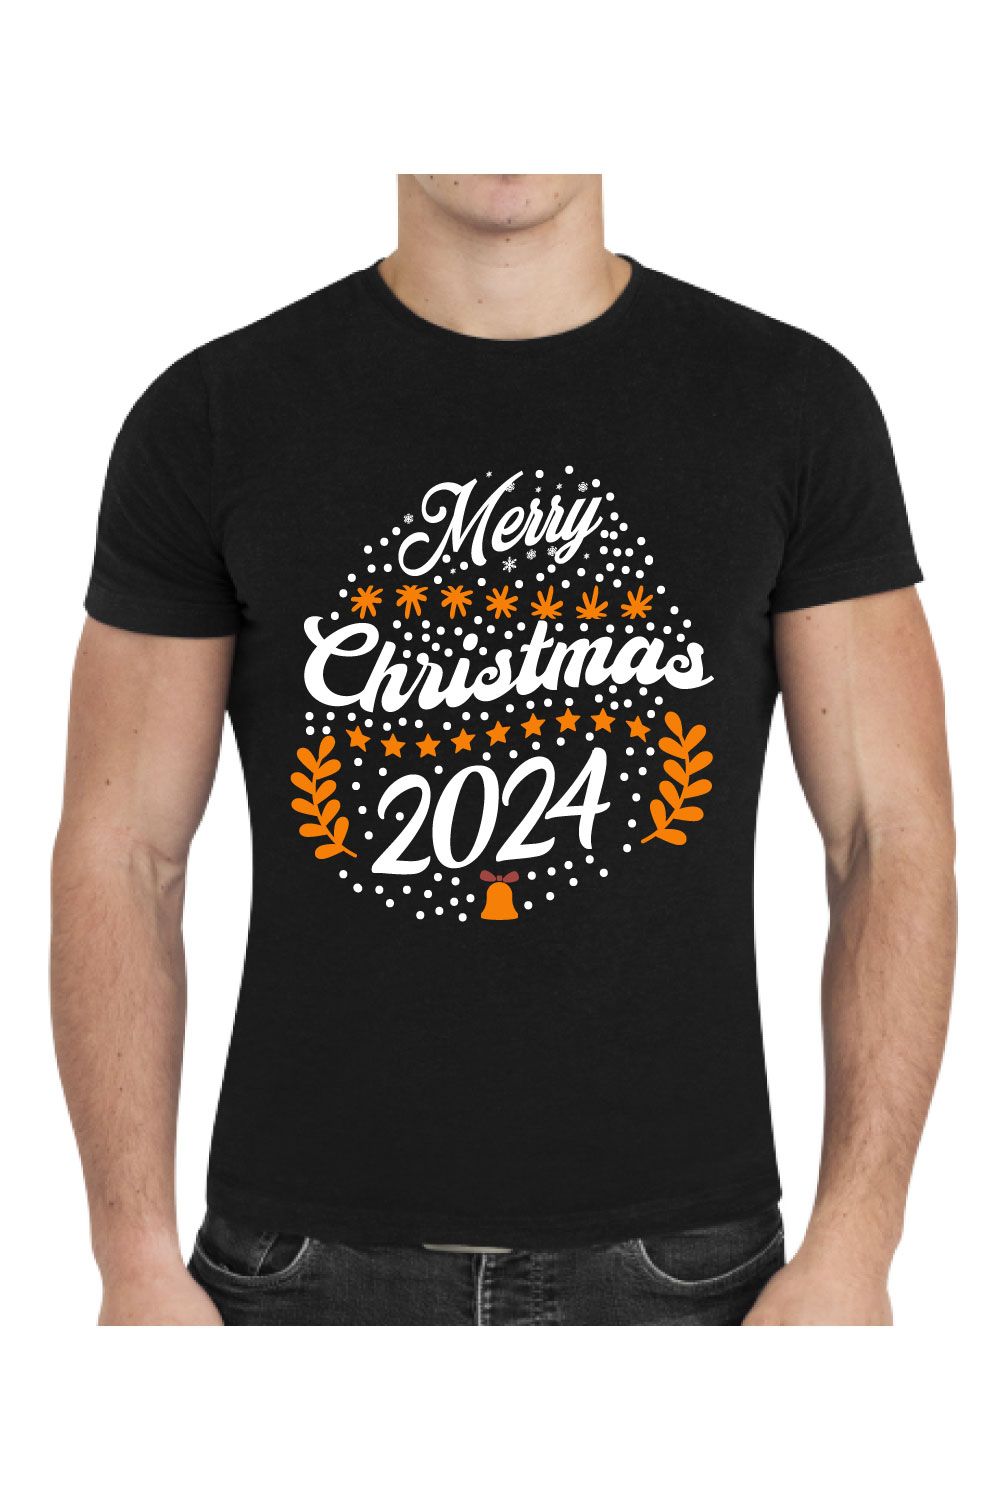 Merry Christmas T-Shirt Design pinterest preview image.